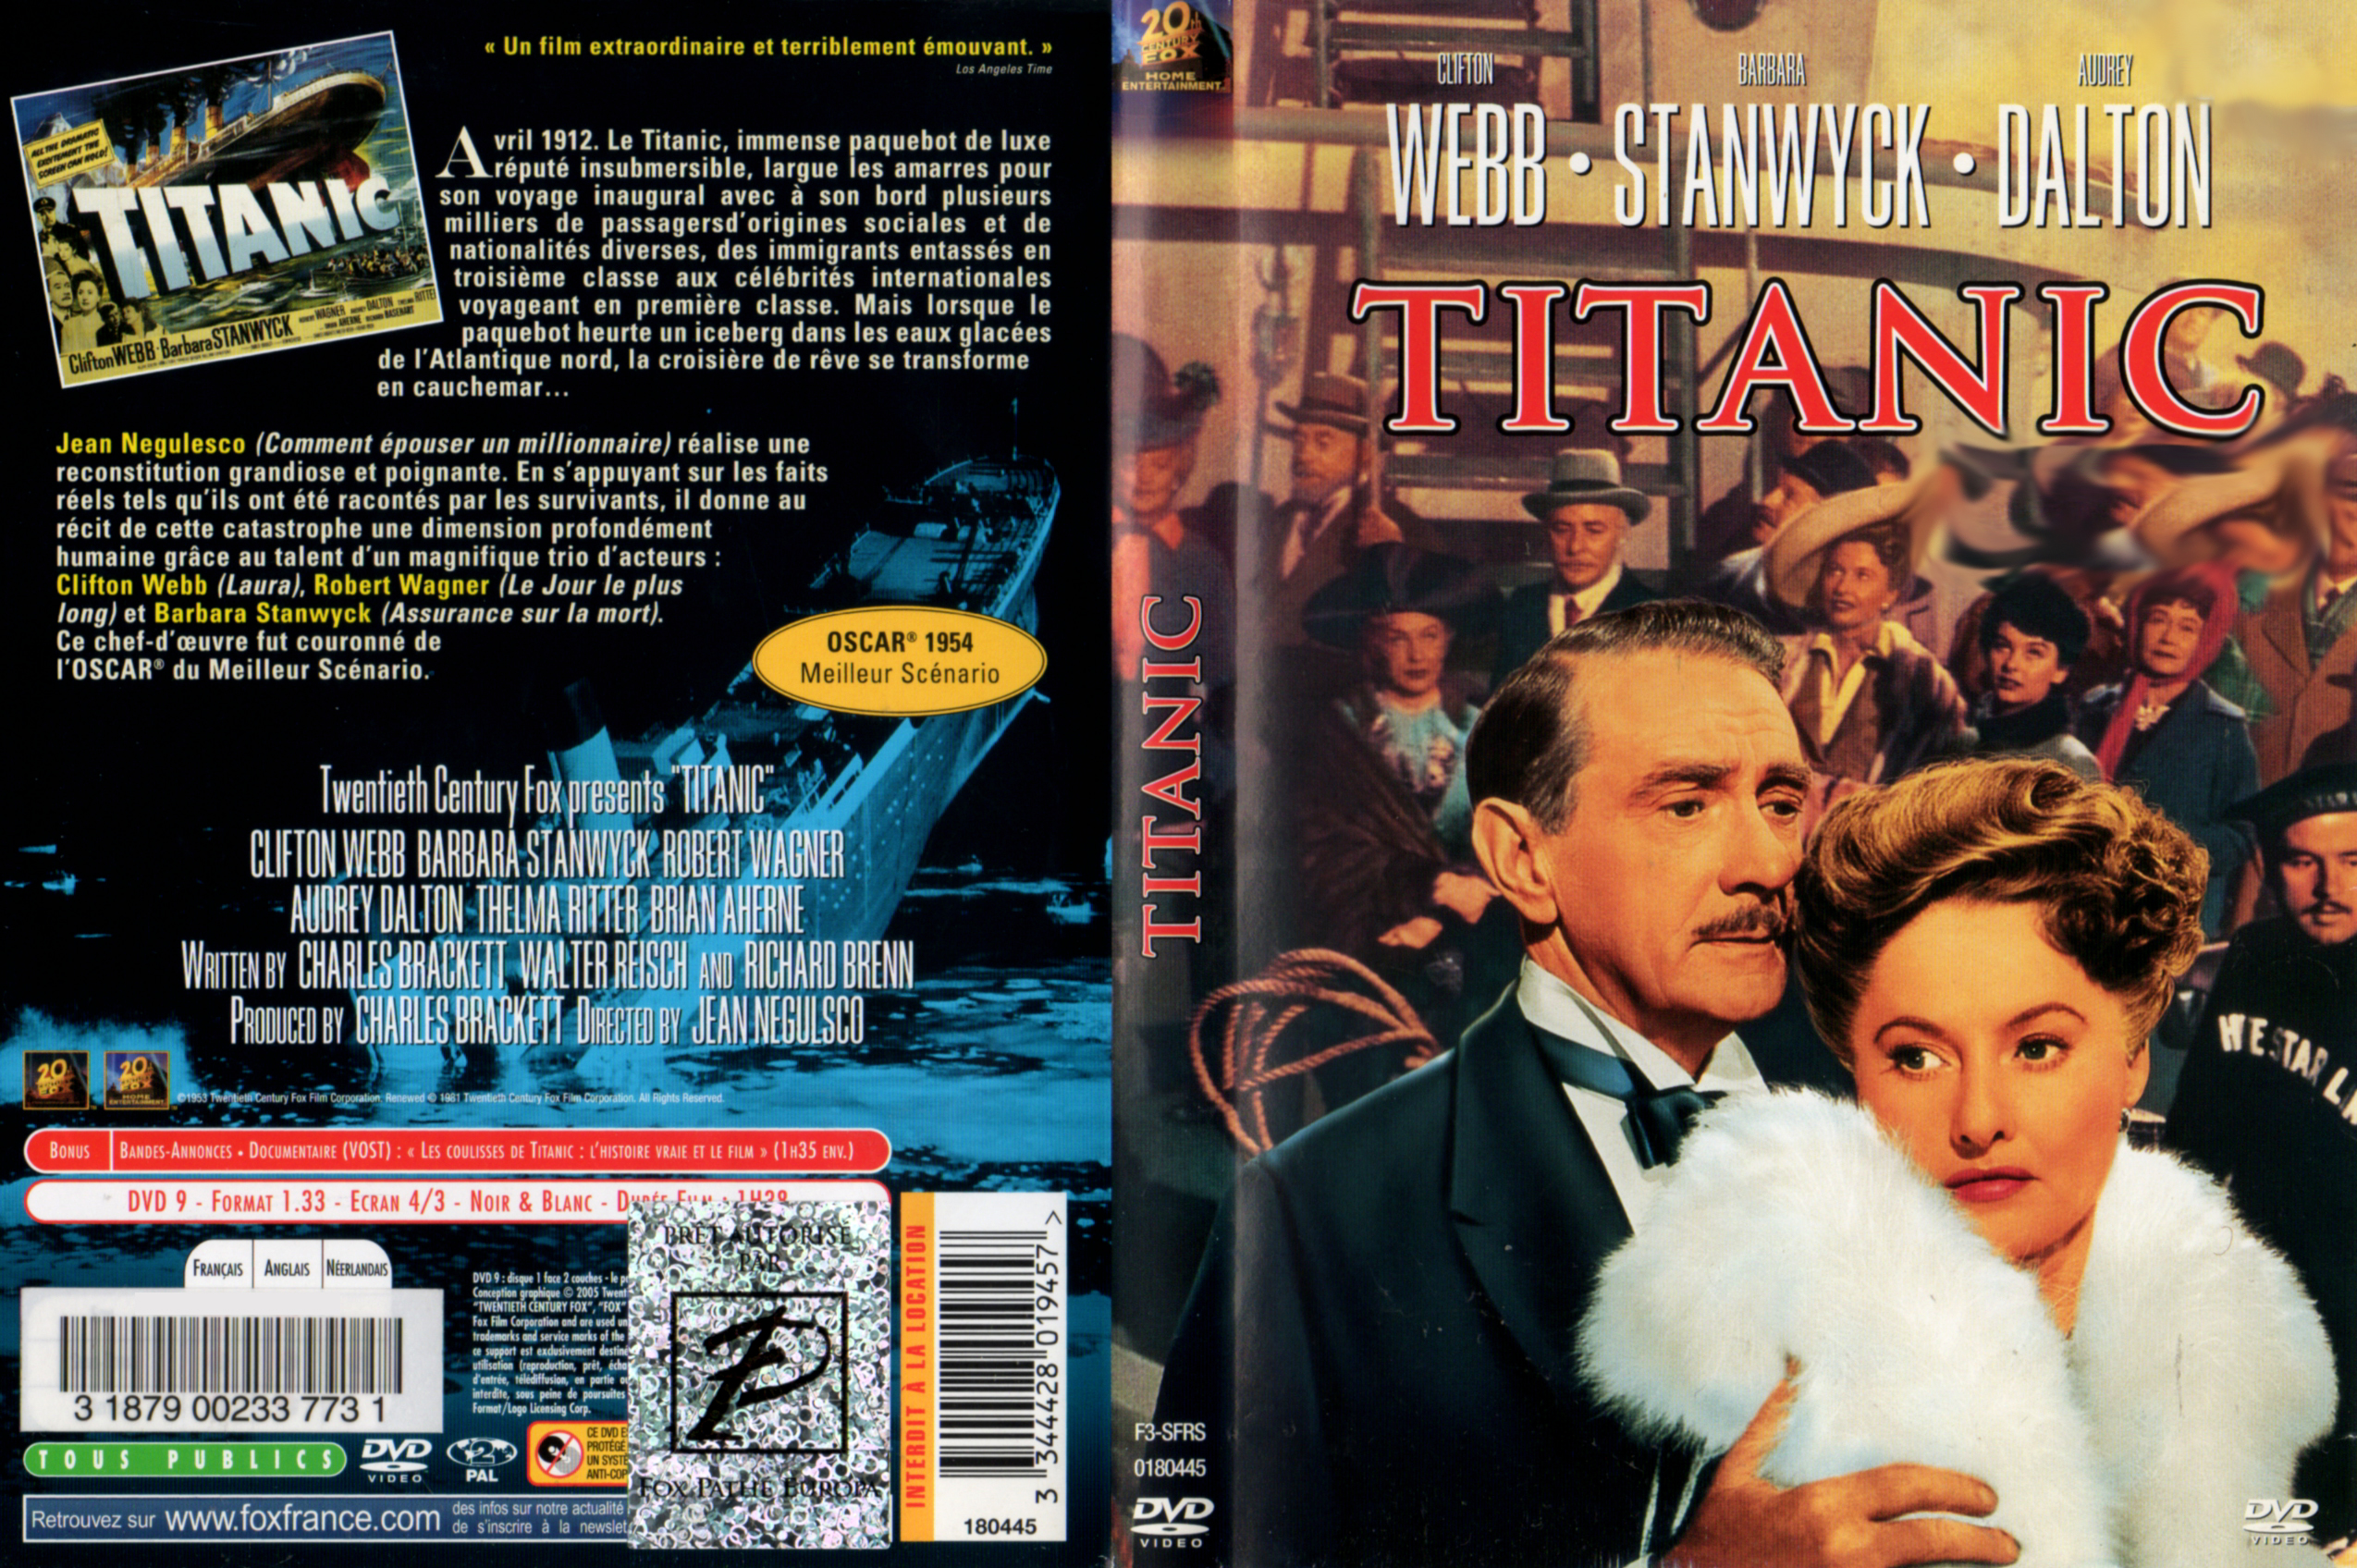 Jaquette DVD Titanic (1953) v2